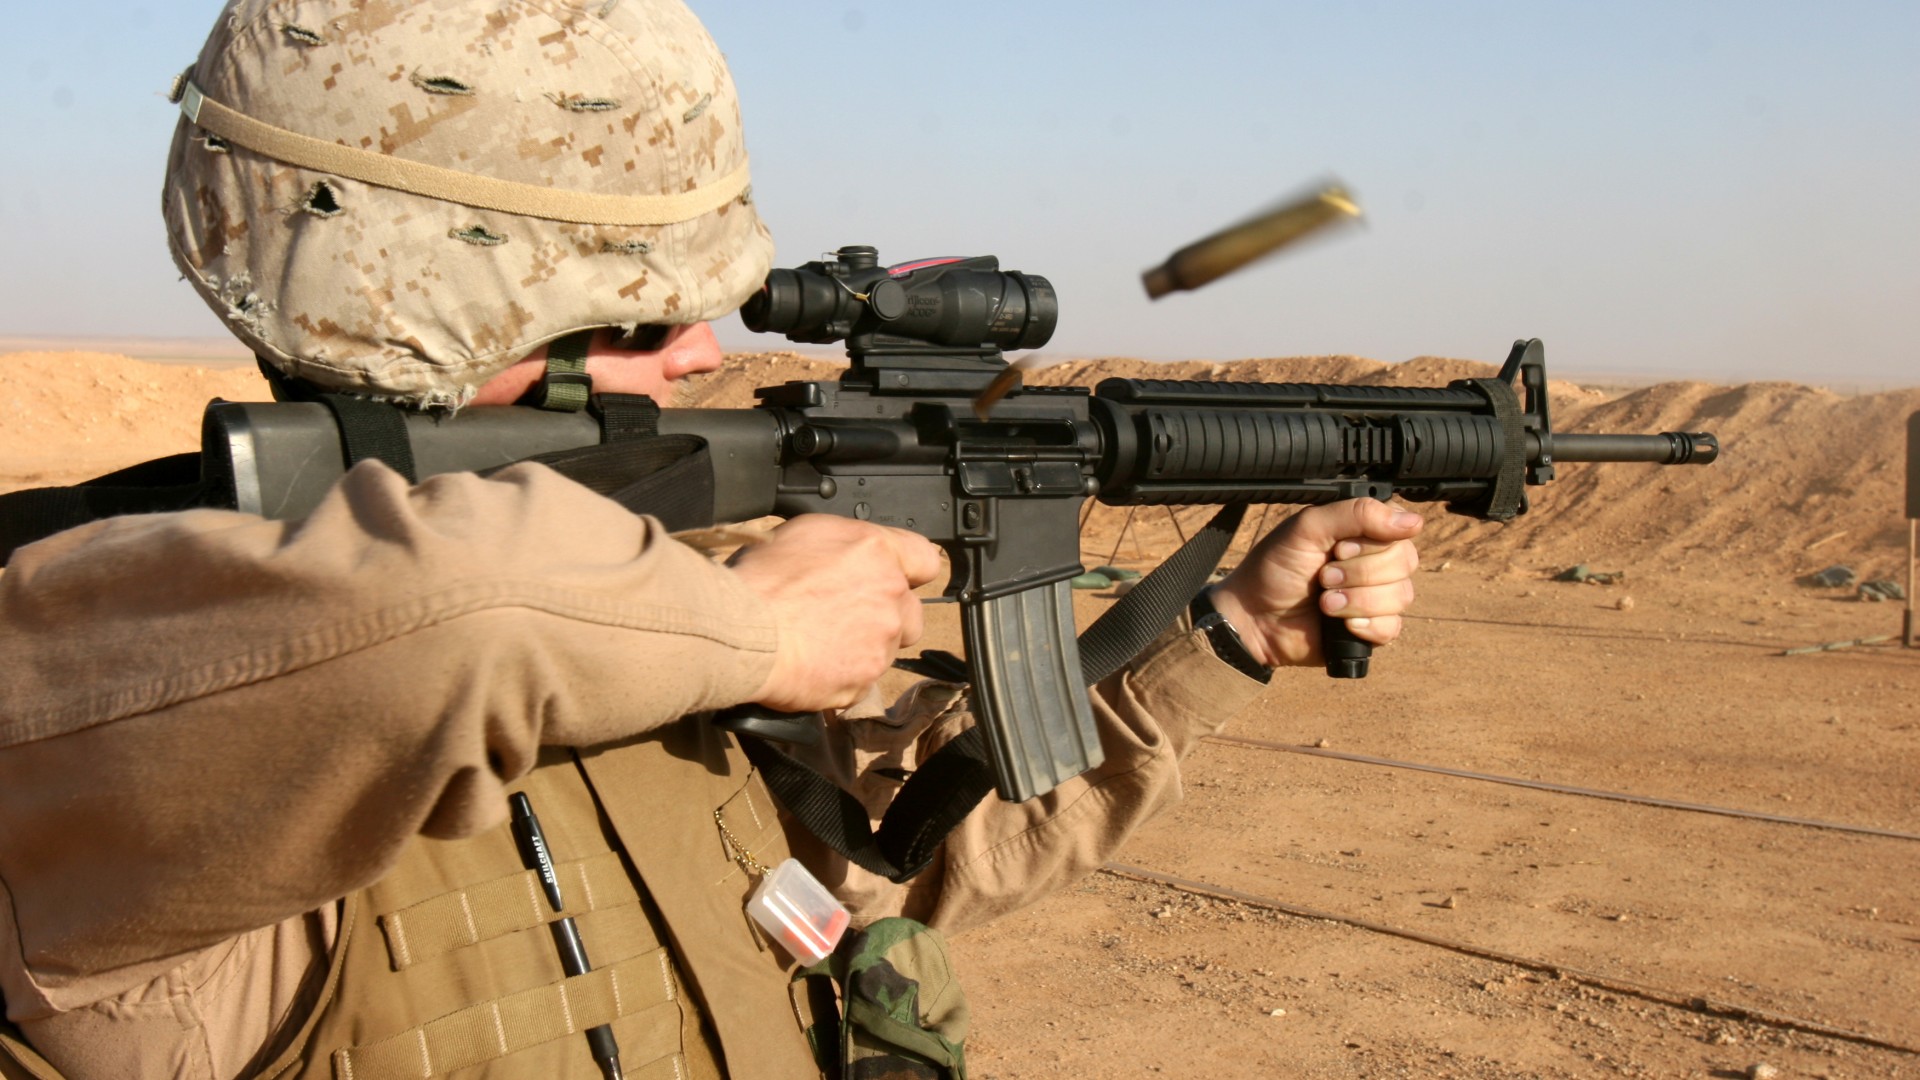 стрельба, эмка, Армия США, M16 rifle, U.S. Marine, M16A1, M4A1, U.S. Army, soldier, firing, desert (horizontal)